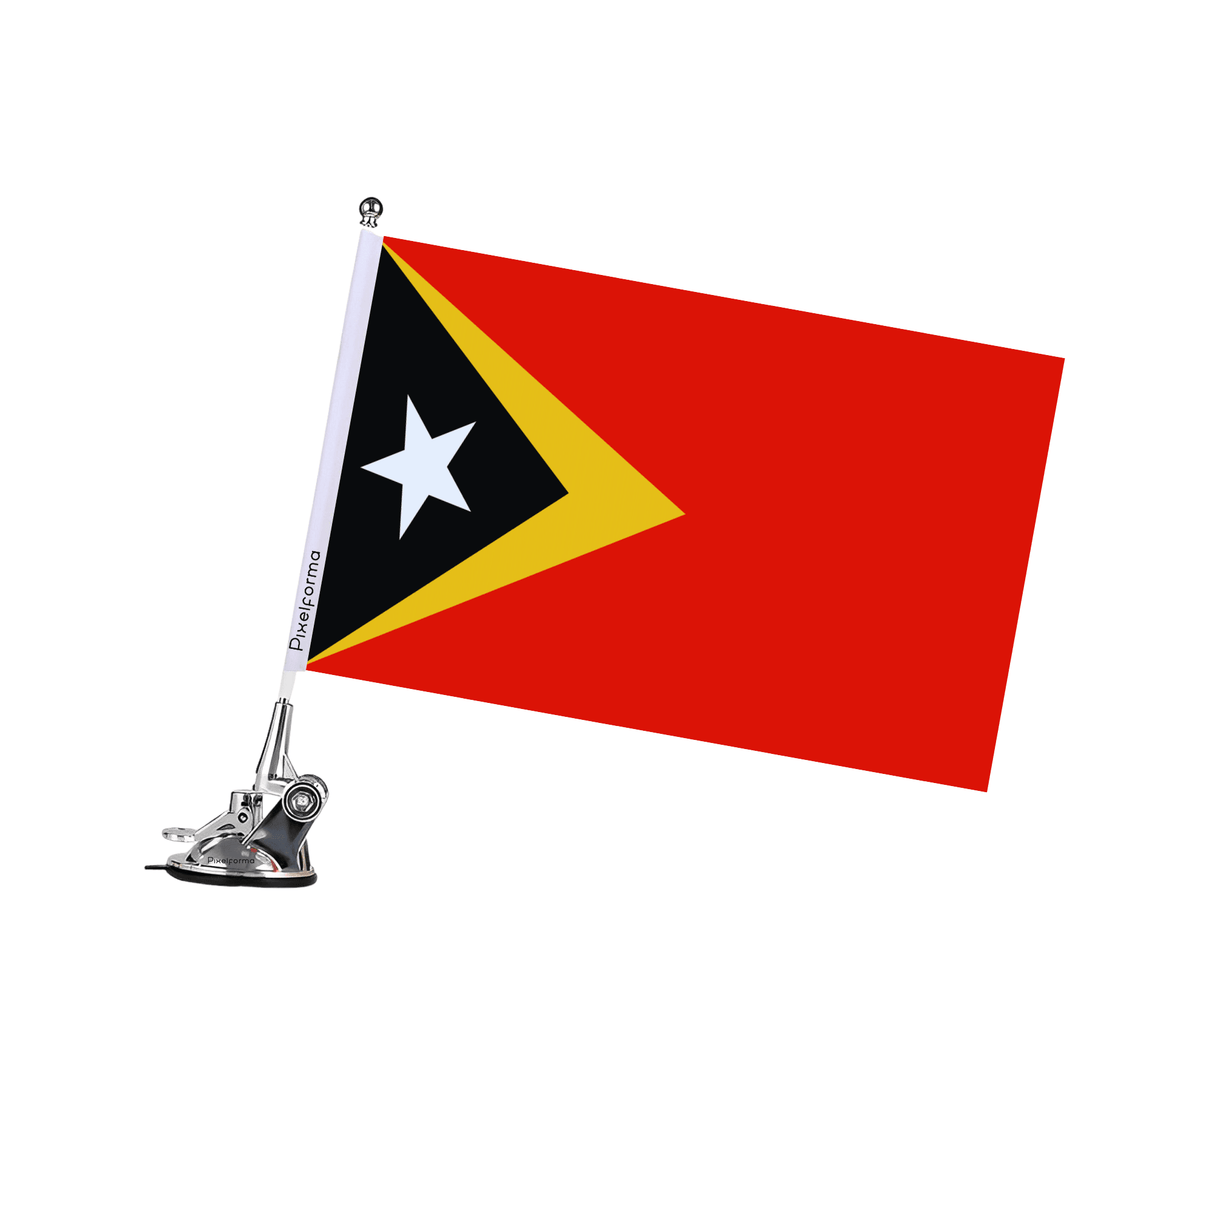 Mât à Ventouse Drapeau du Timor oriental - Pixelforma 